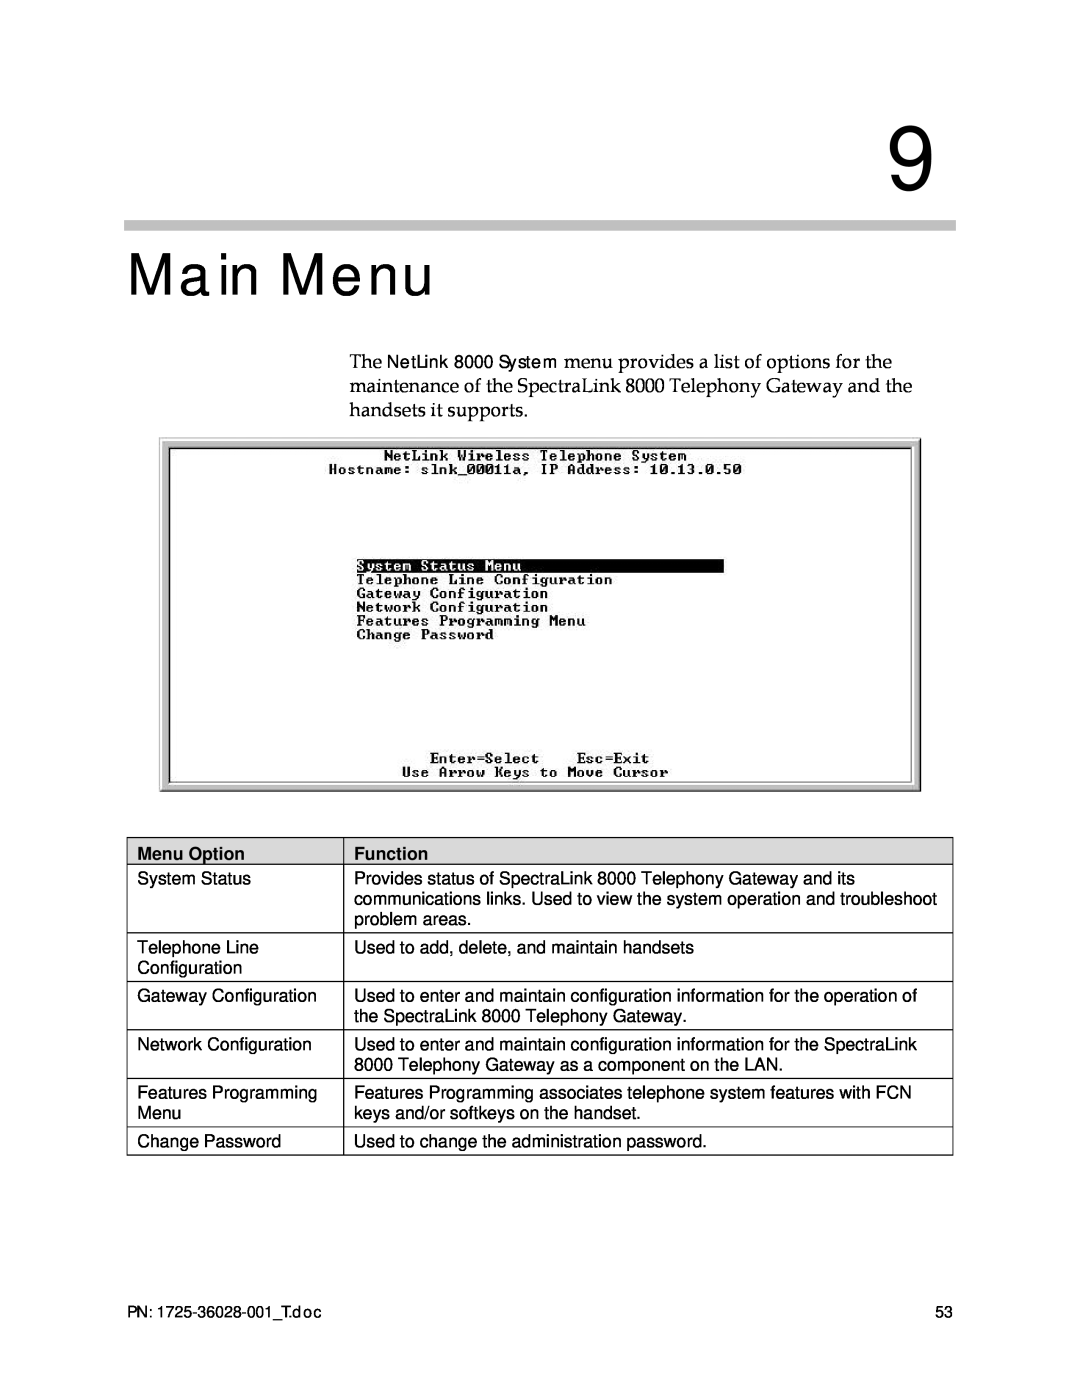 Polycom 1725-36028-001 manual Main Menu, Menu Option, Function 